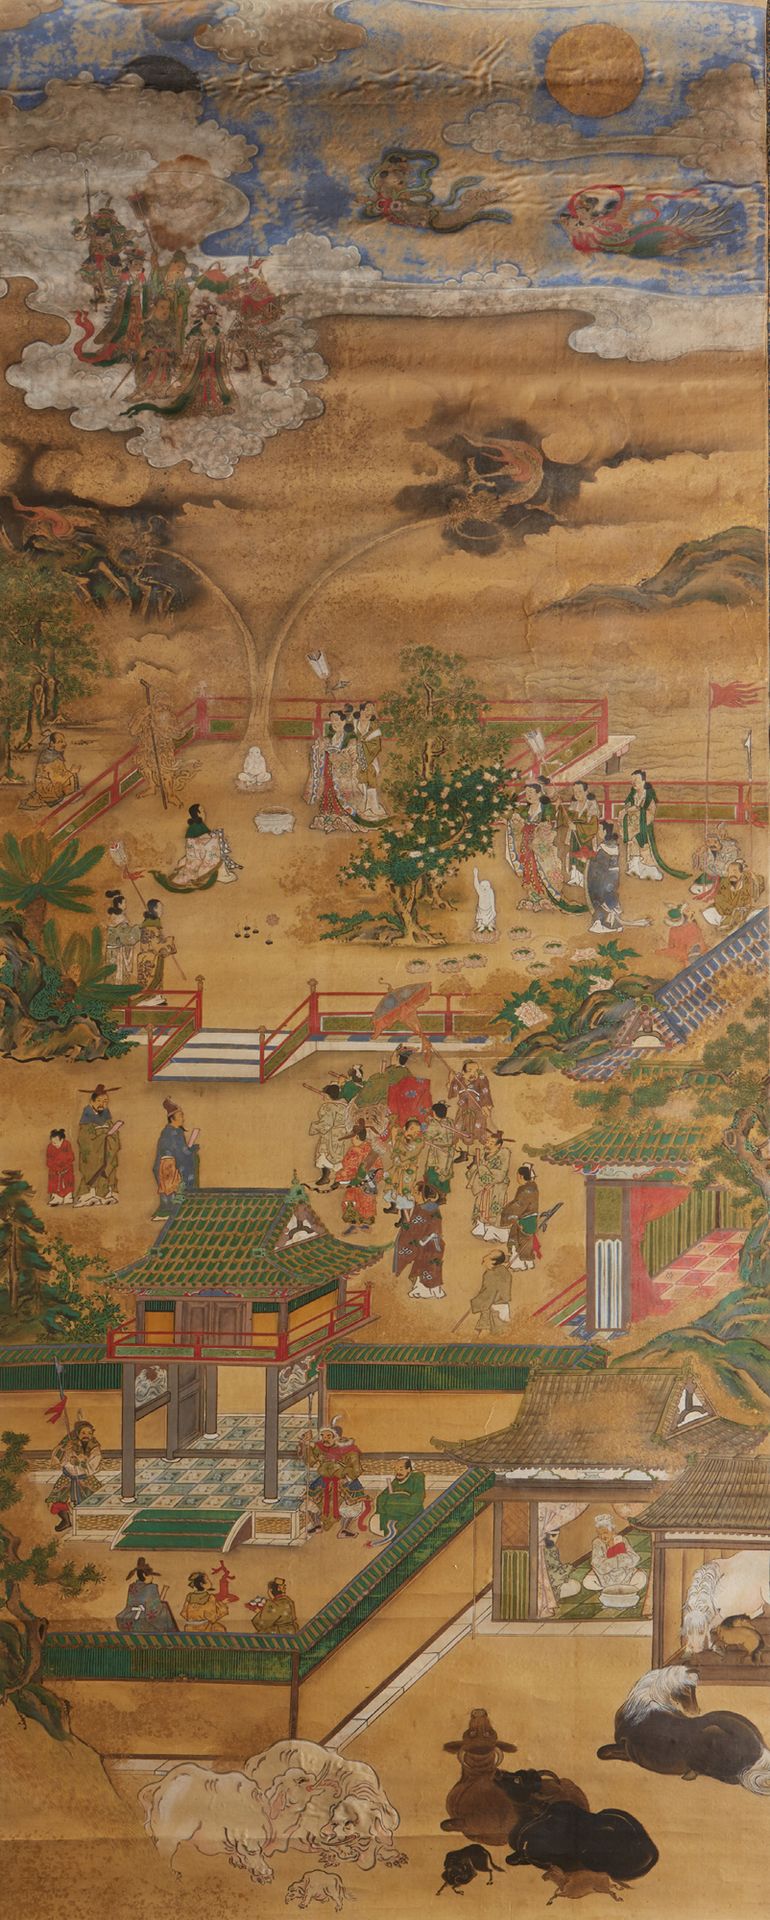 JAPON 有趣的绢本水墨画，表现了一个宫殿花园里的几次接待活动。前排是大象、水牛和马匹，靠近由武装人员看守的城墙。天空中的佛教万神殿人物队伍，云中有龙，丝绸框&hellip;